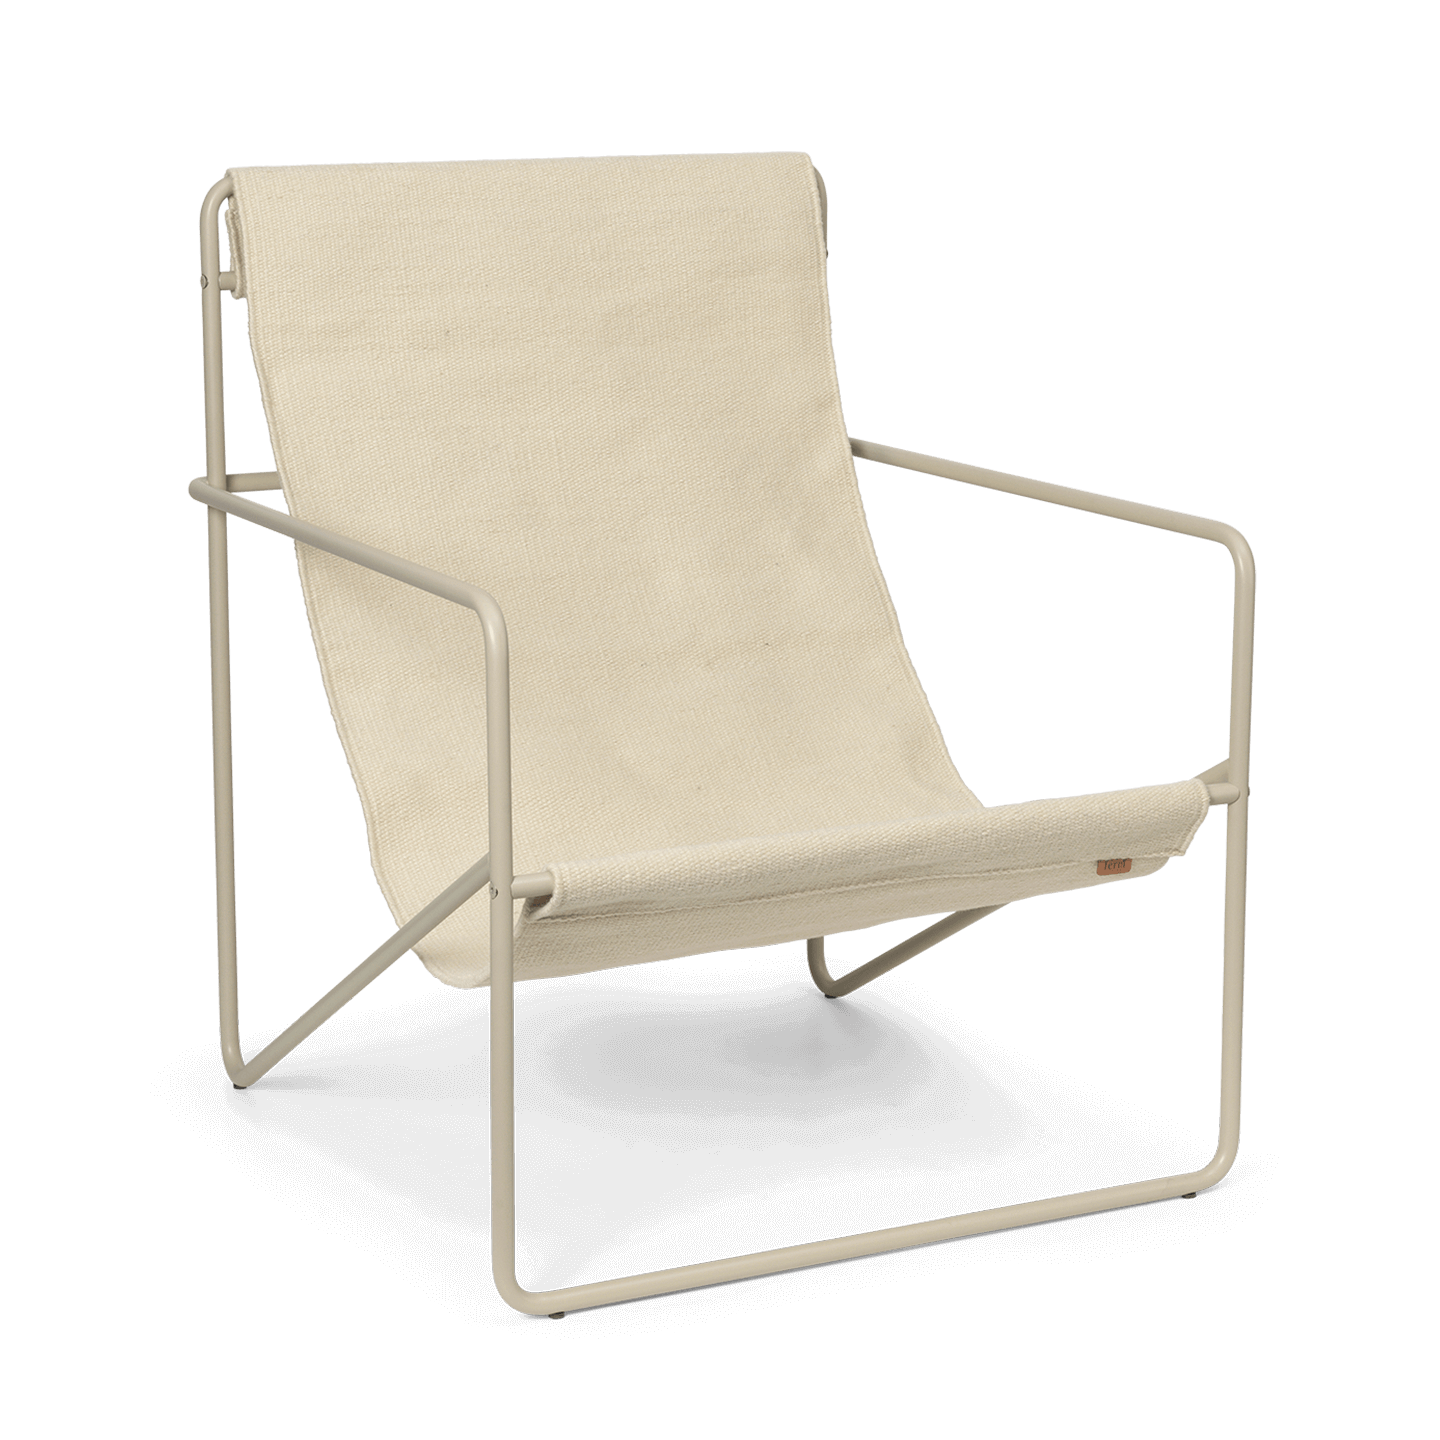 Desert Lounge Chair by ferm LIVING